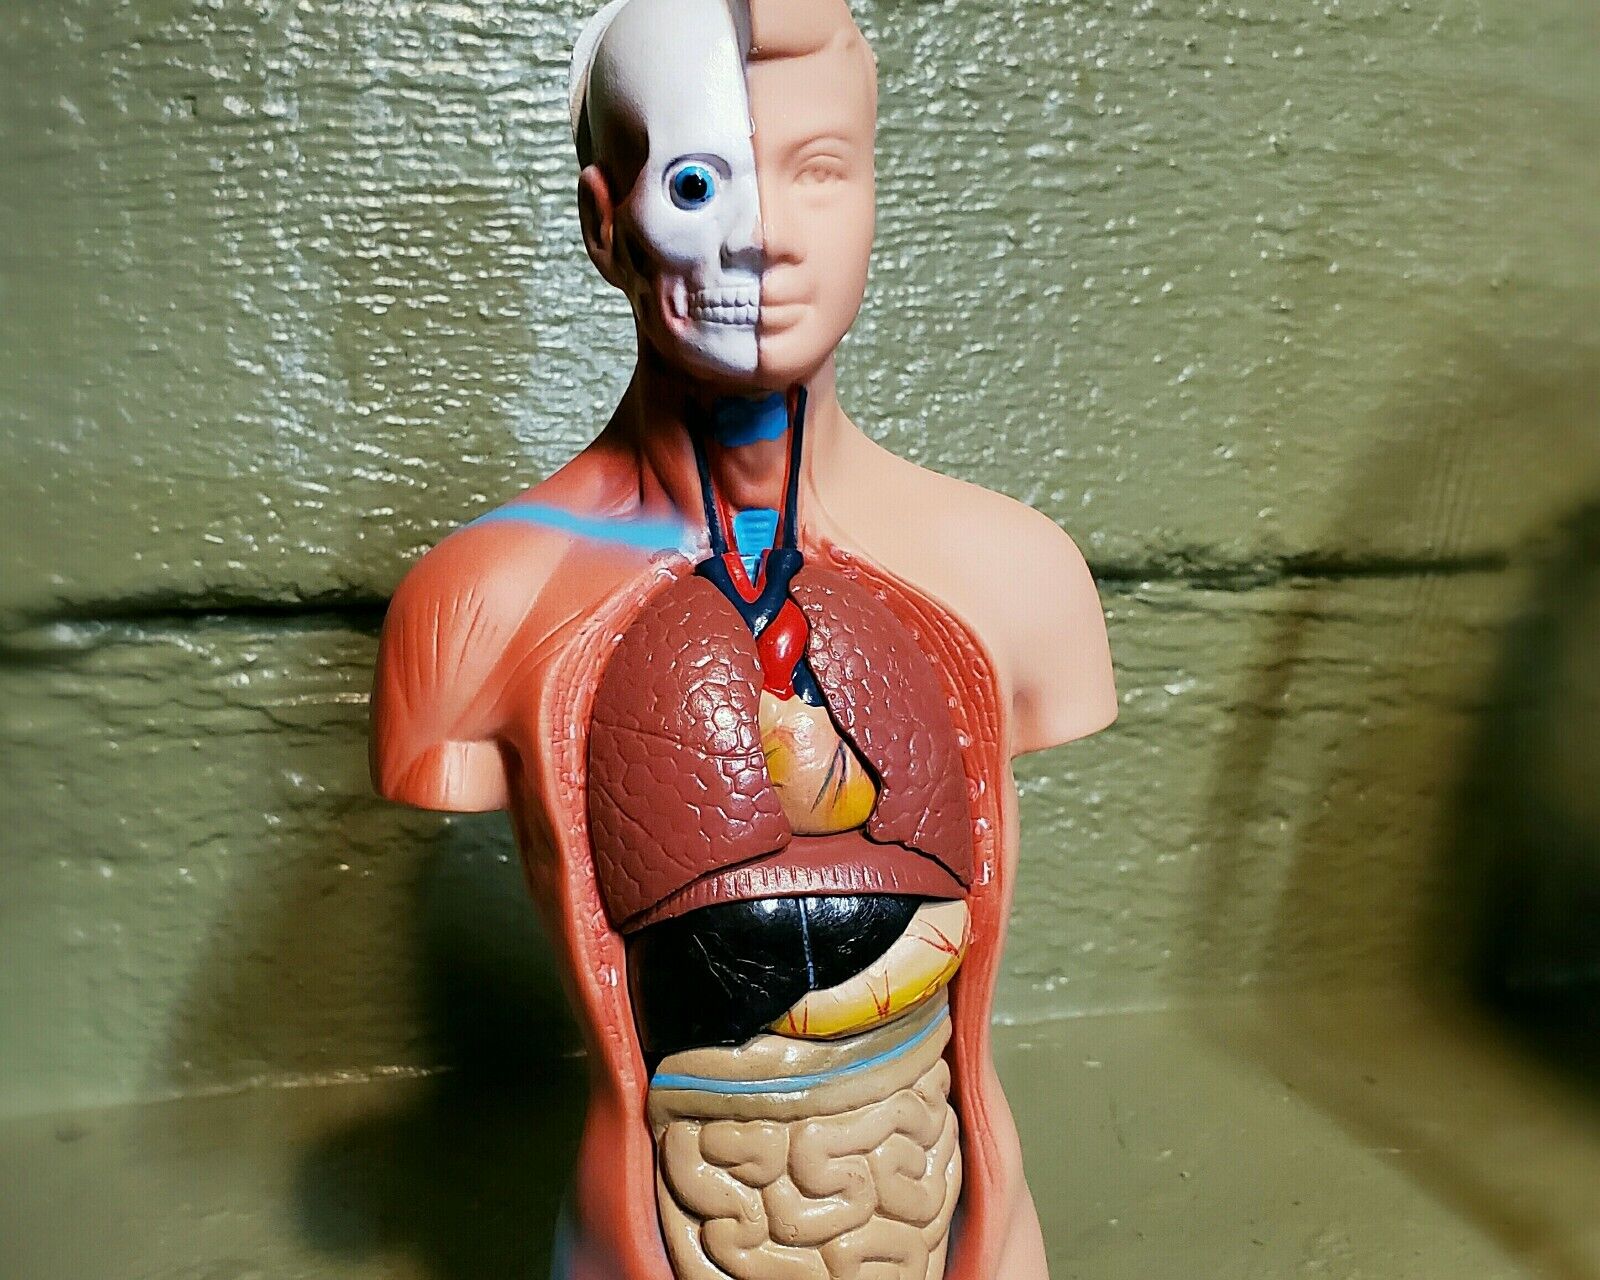 Human Torso Model, Human Medical Model, 15 pieces, Science Oddities, Curiosities